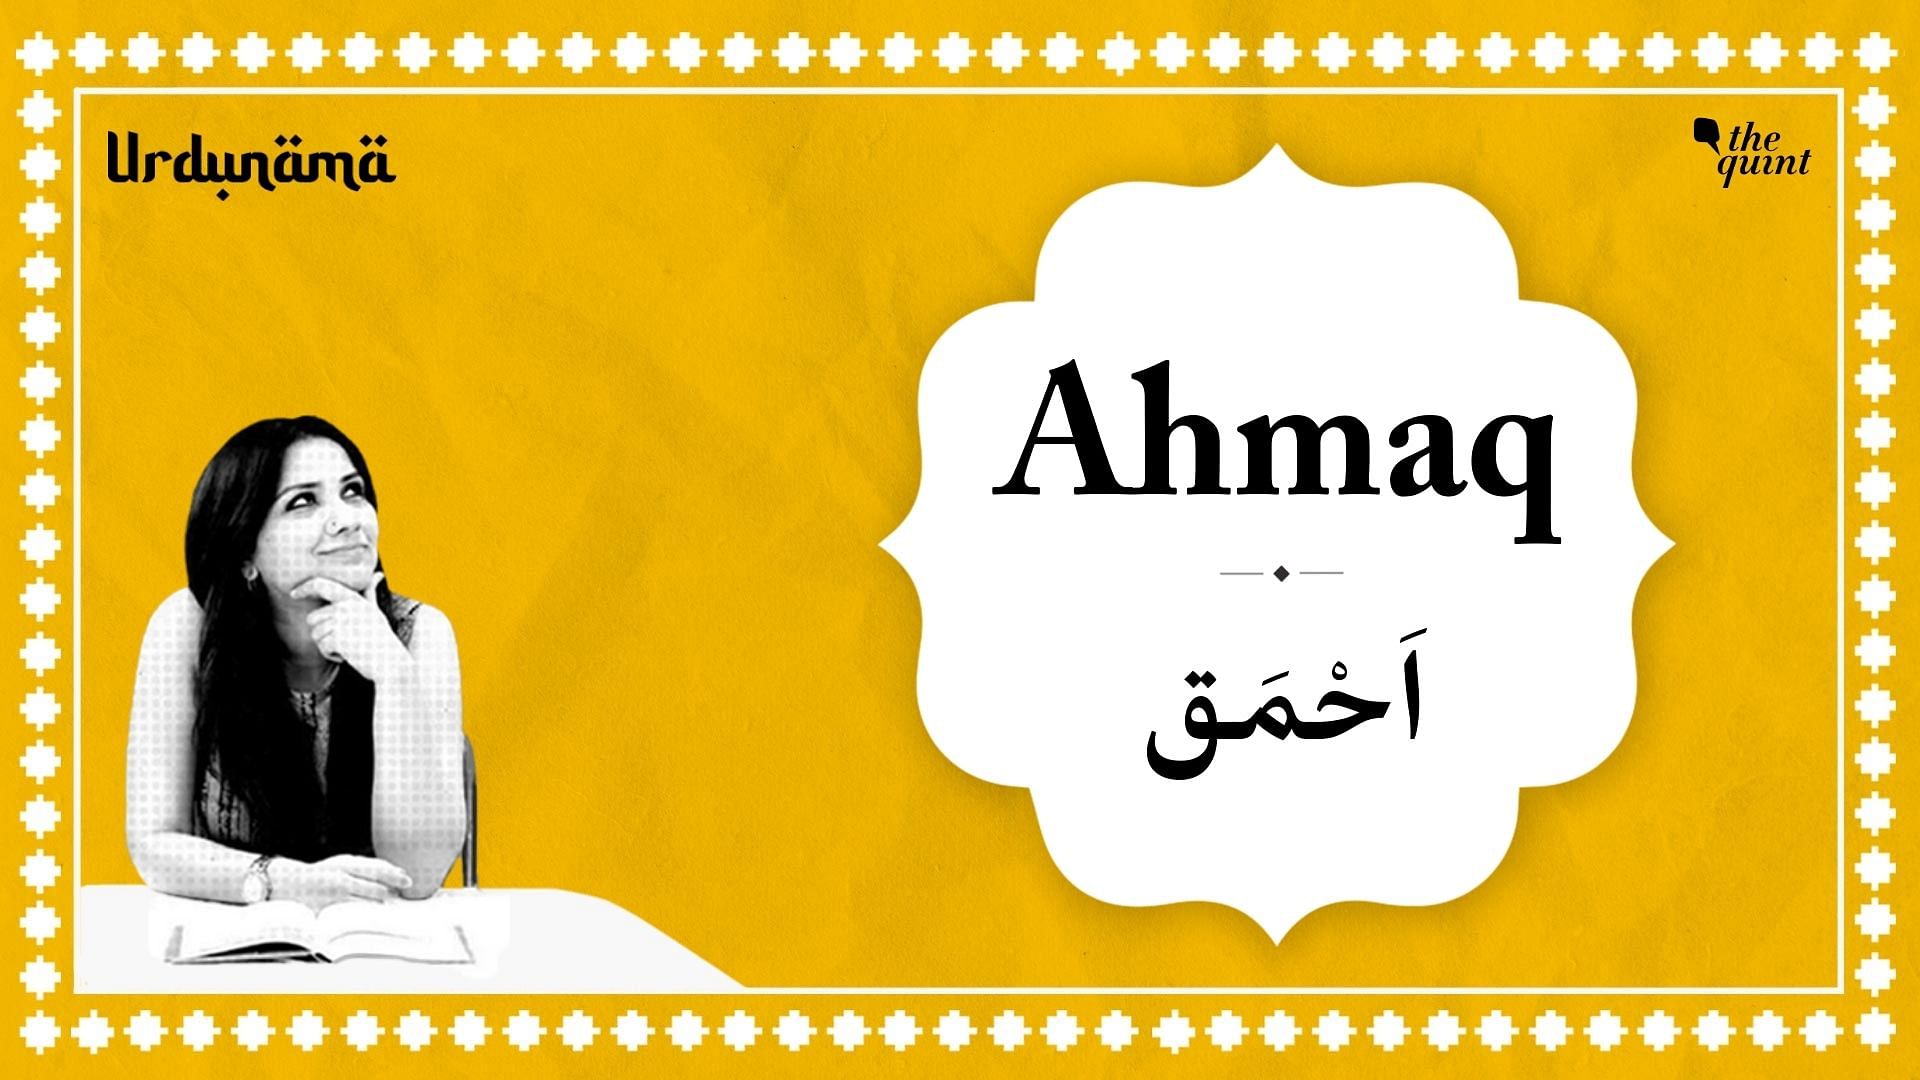 <div class="paragraphs"><p>Urdunama episode on 'Ahmaq'</p></div>